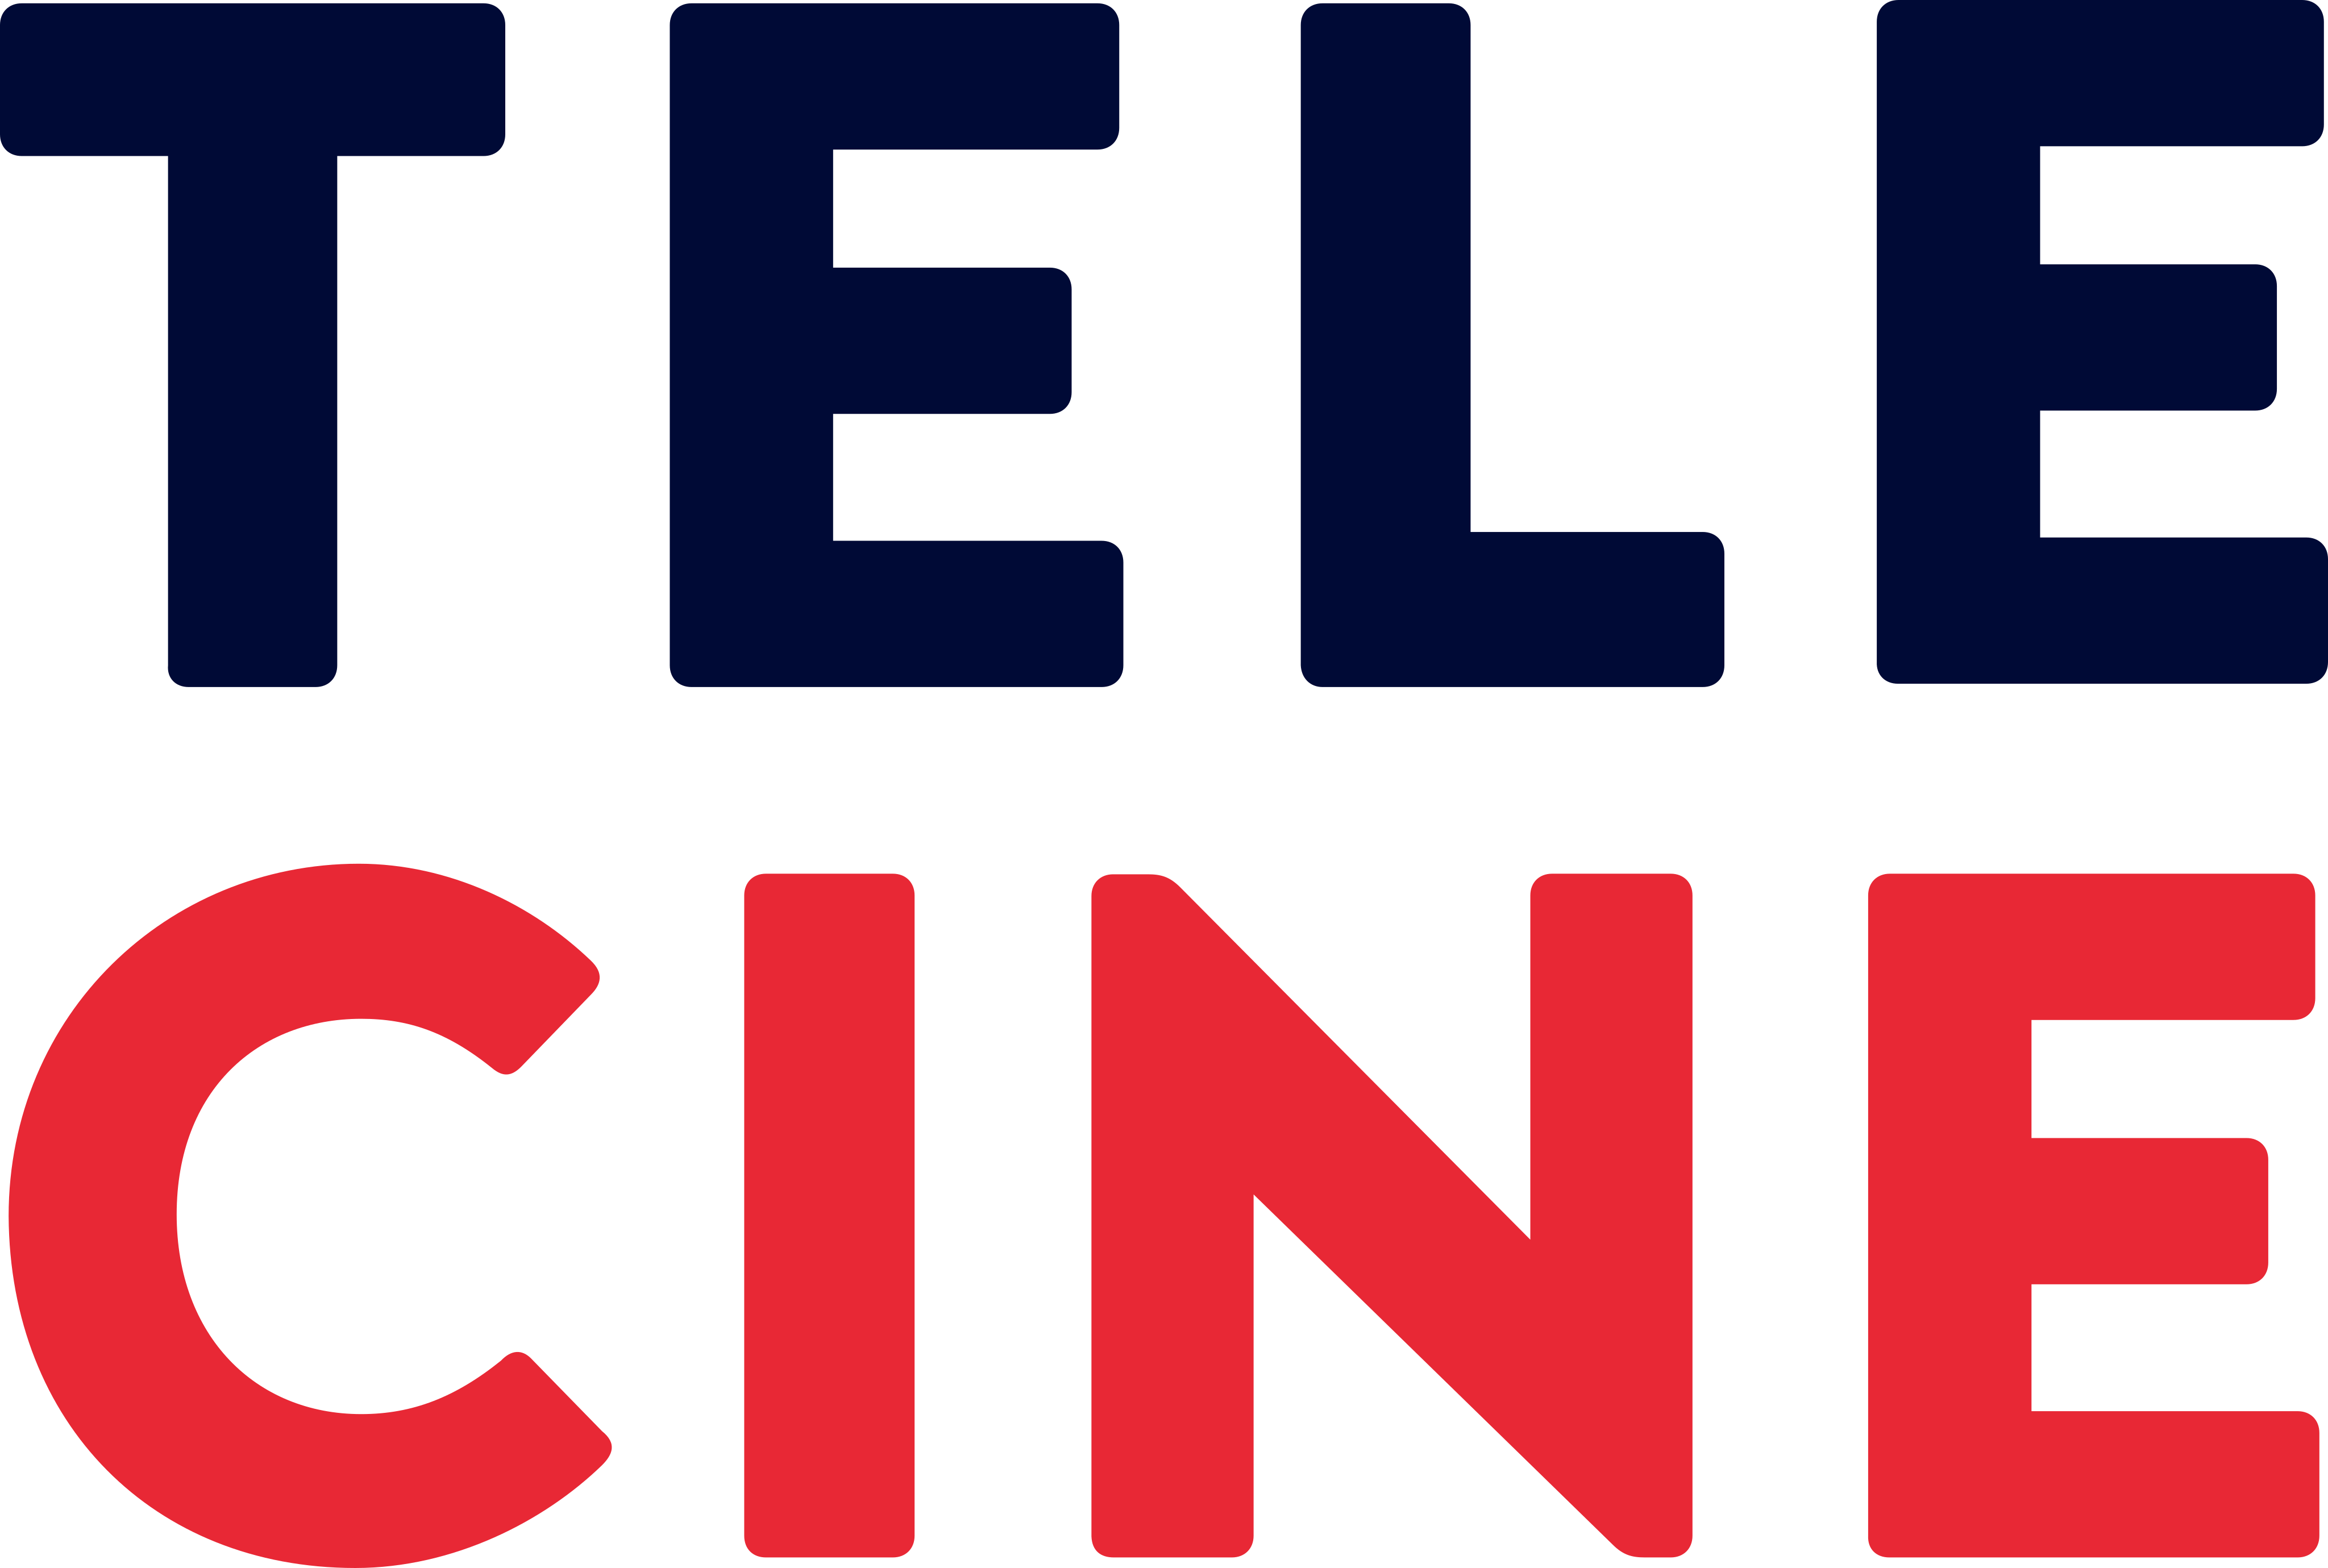 Telecine logo.